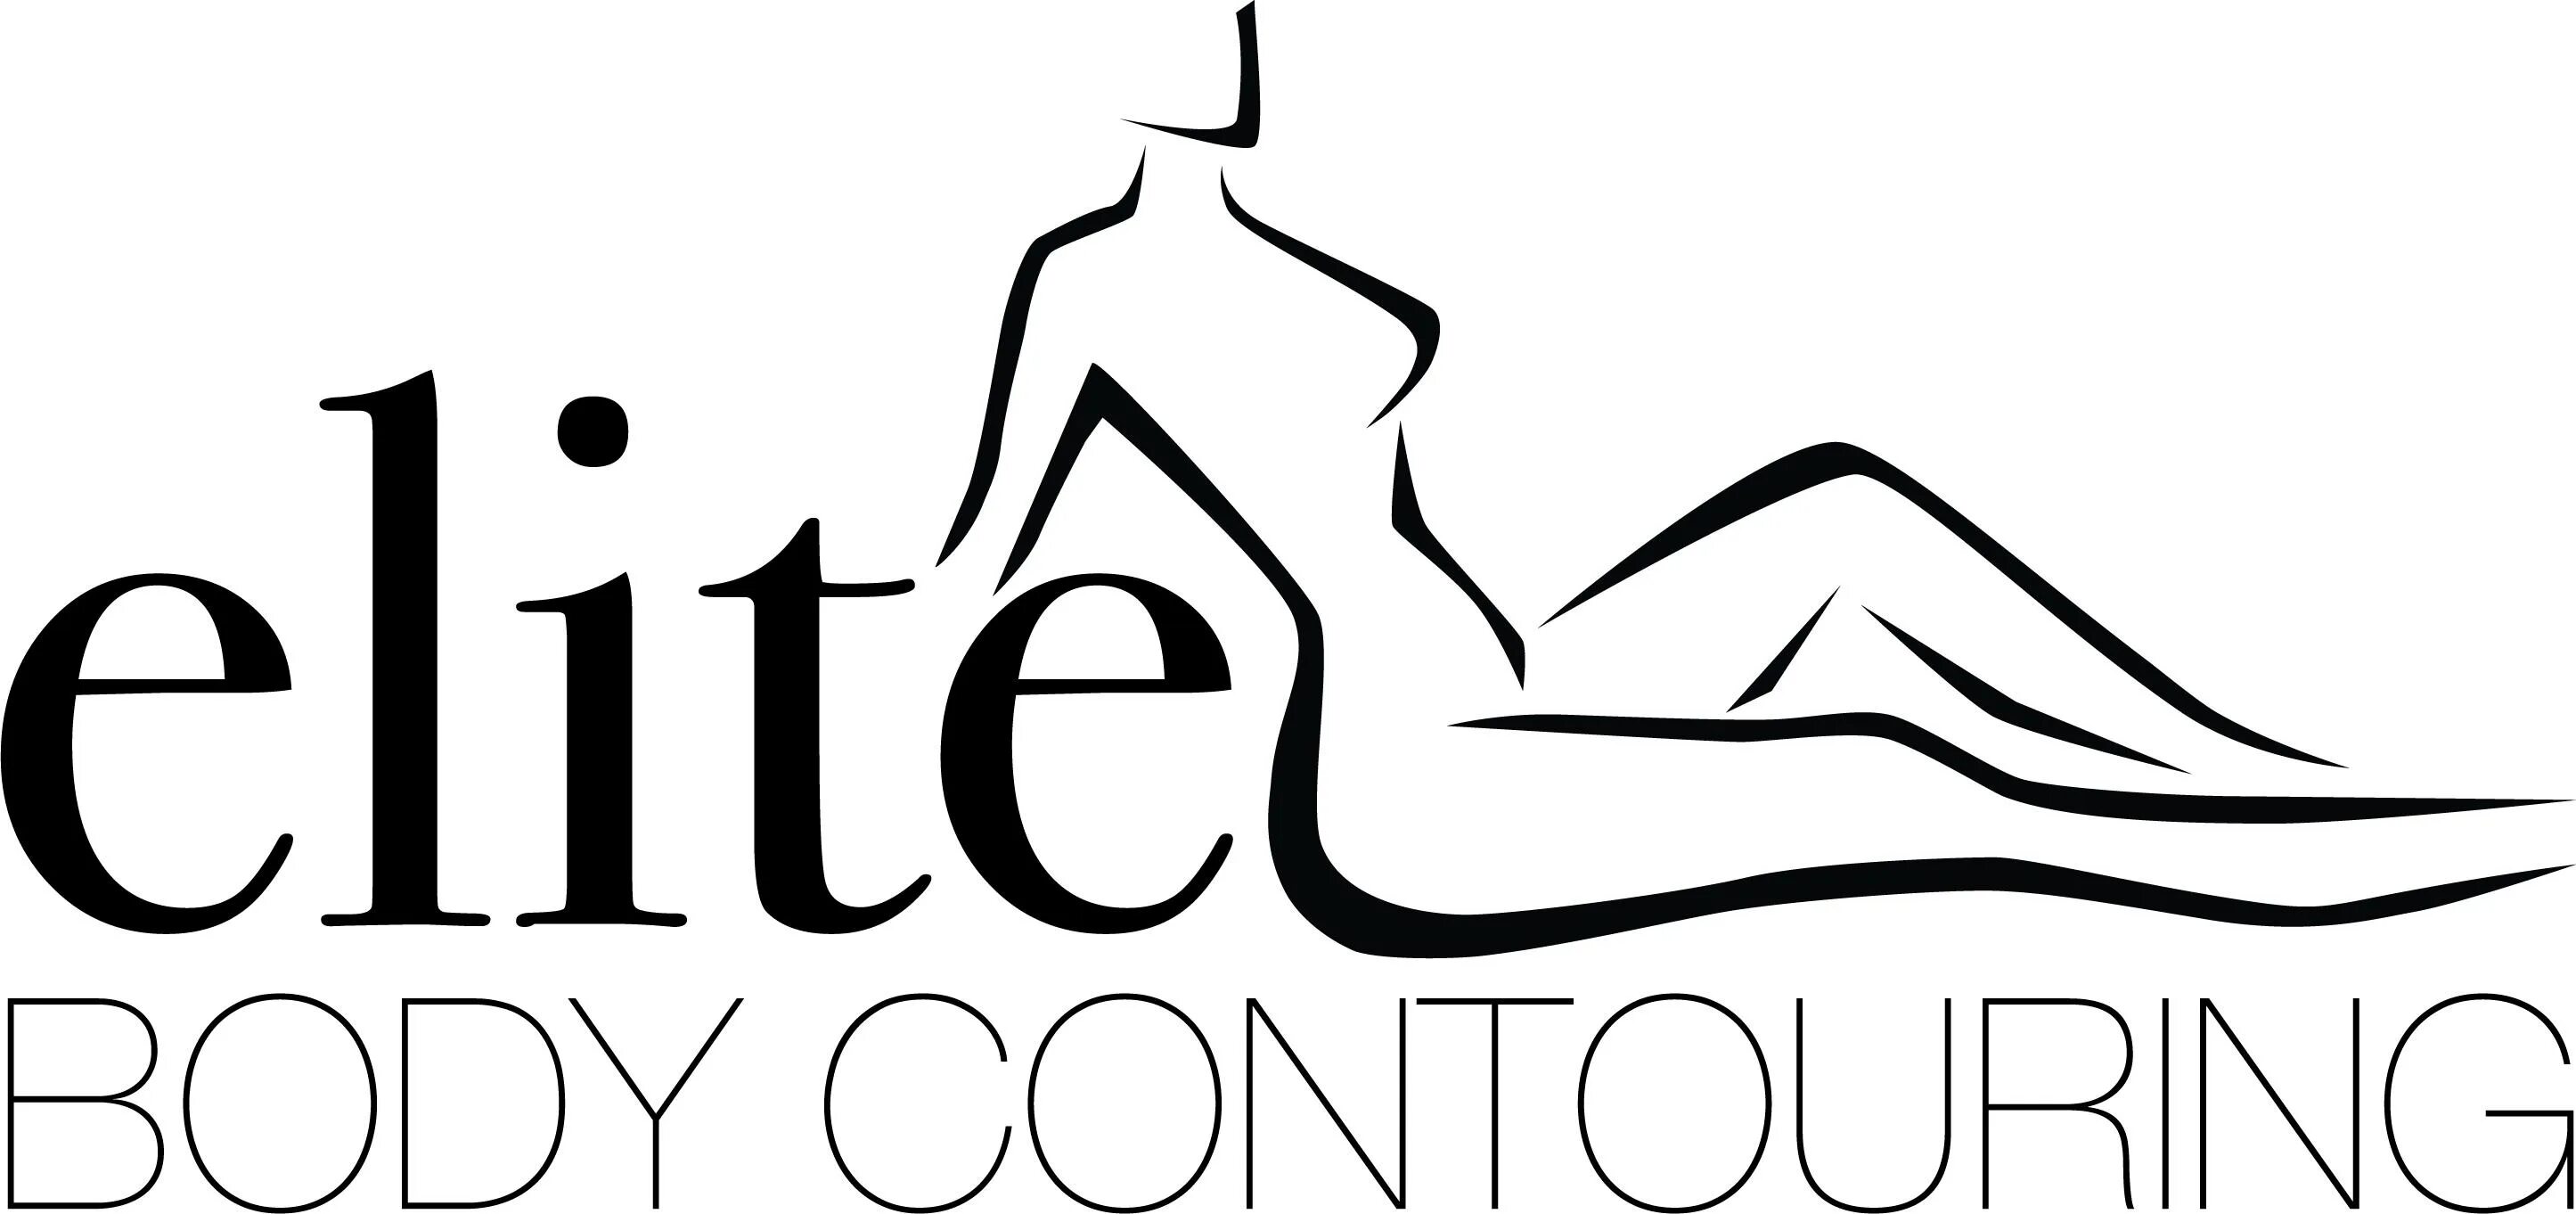 Body contour. Contour логотип. Sculpt body Spa logo. Элит боди логотип одежды. Colorado body Contour.